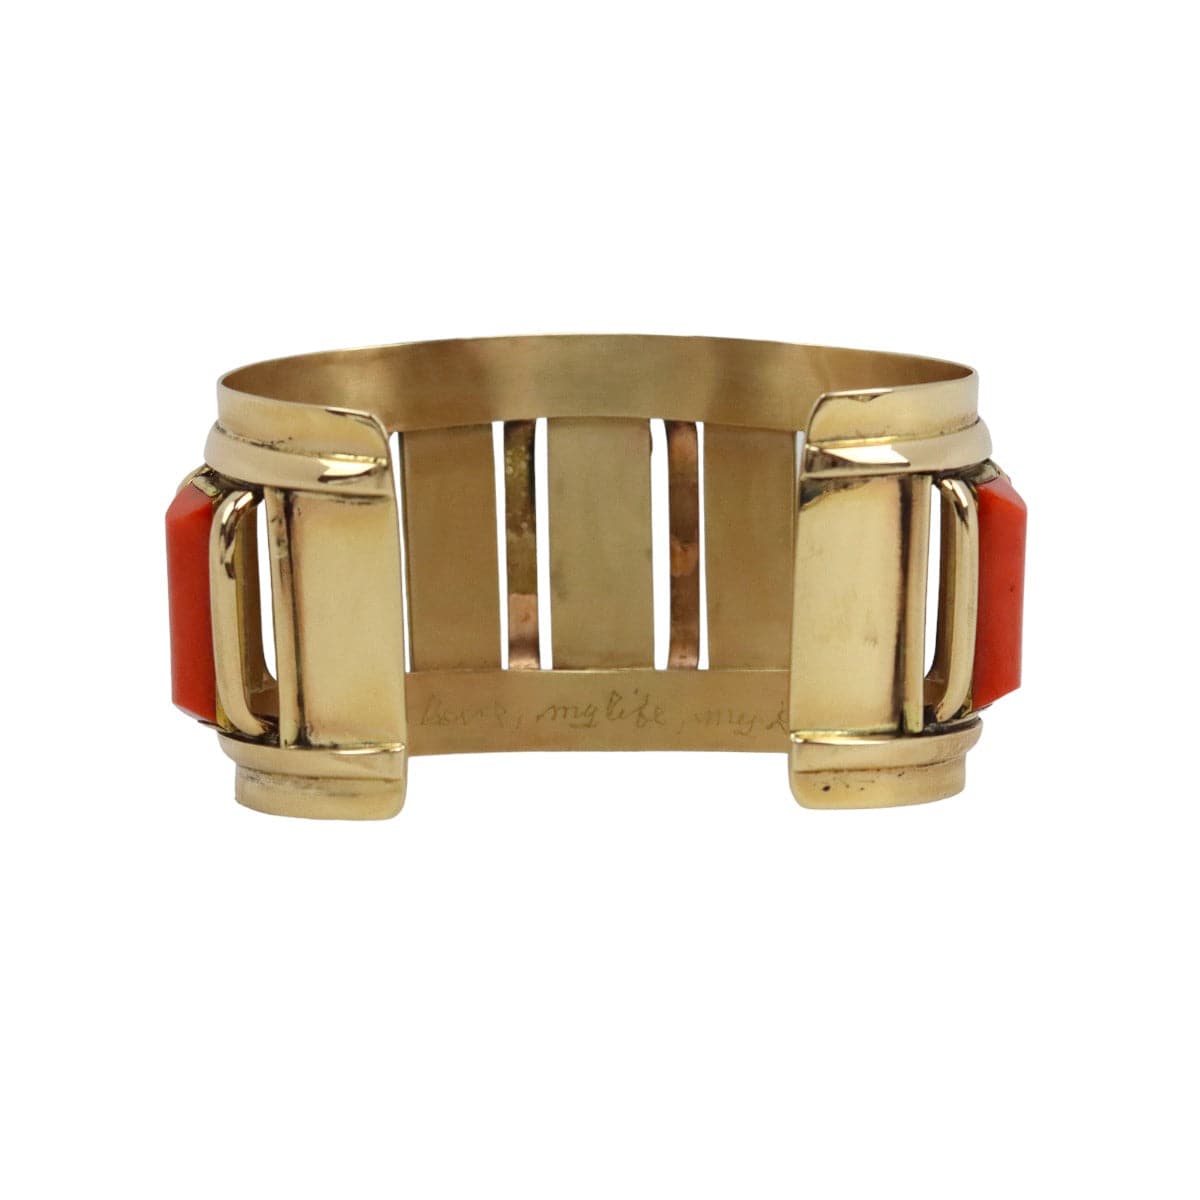 Frank Patania Jr. - Coral and 14K Gold Bracelet c. 2002, size 7 (J91699-1022-047)
 2